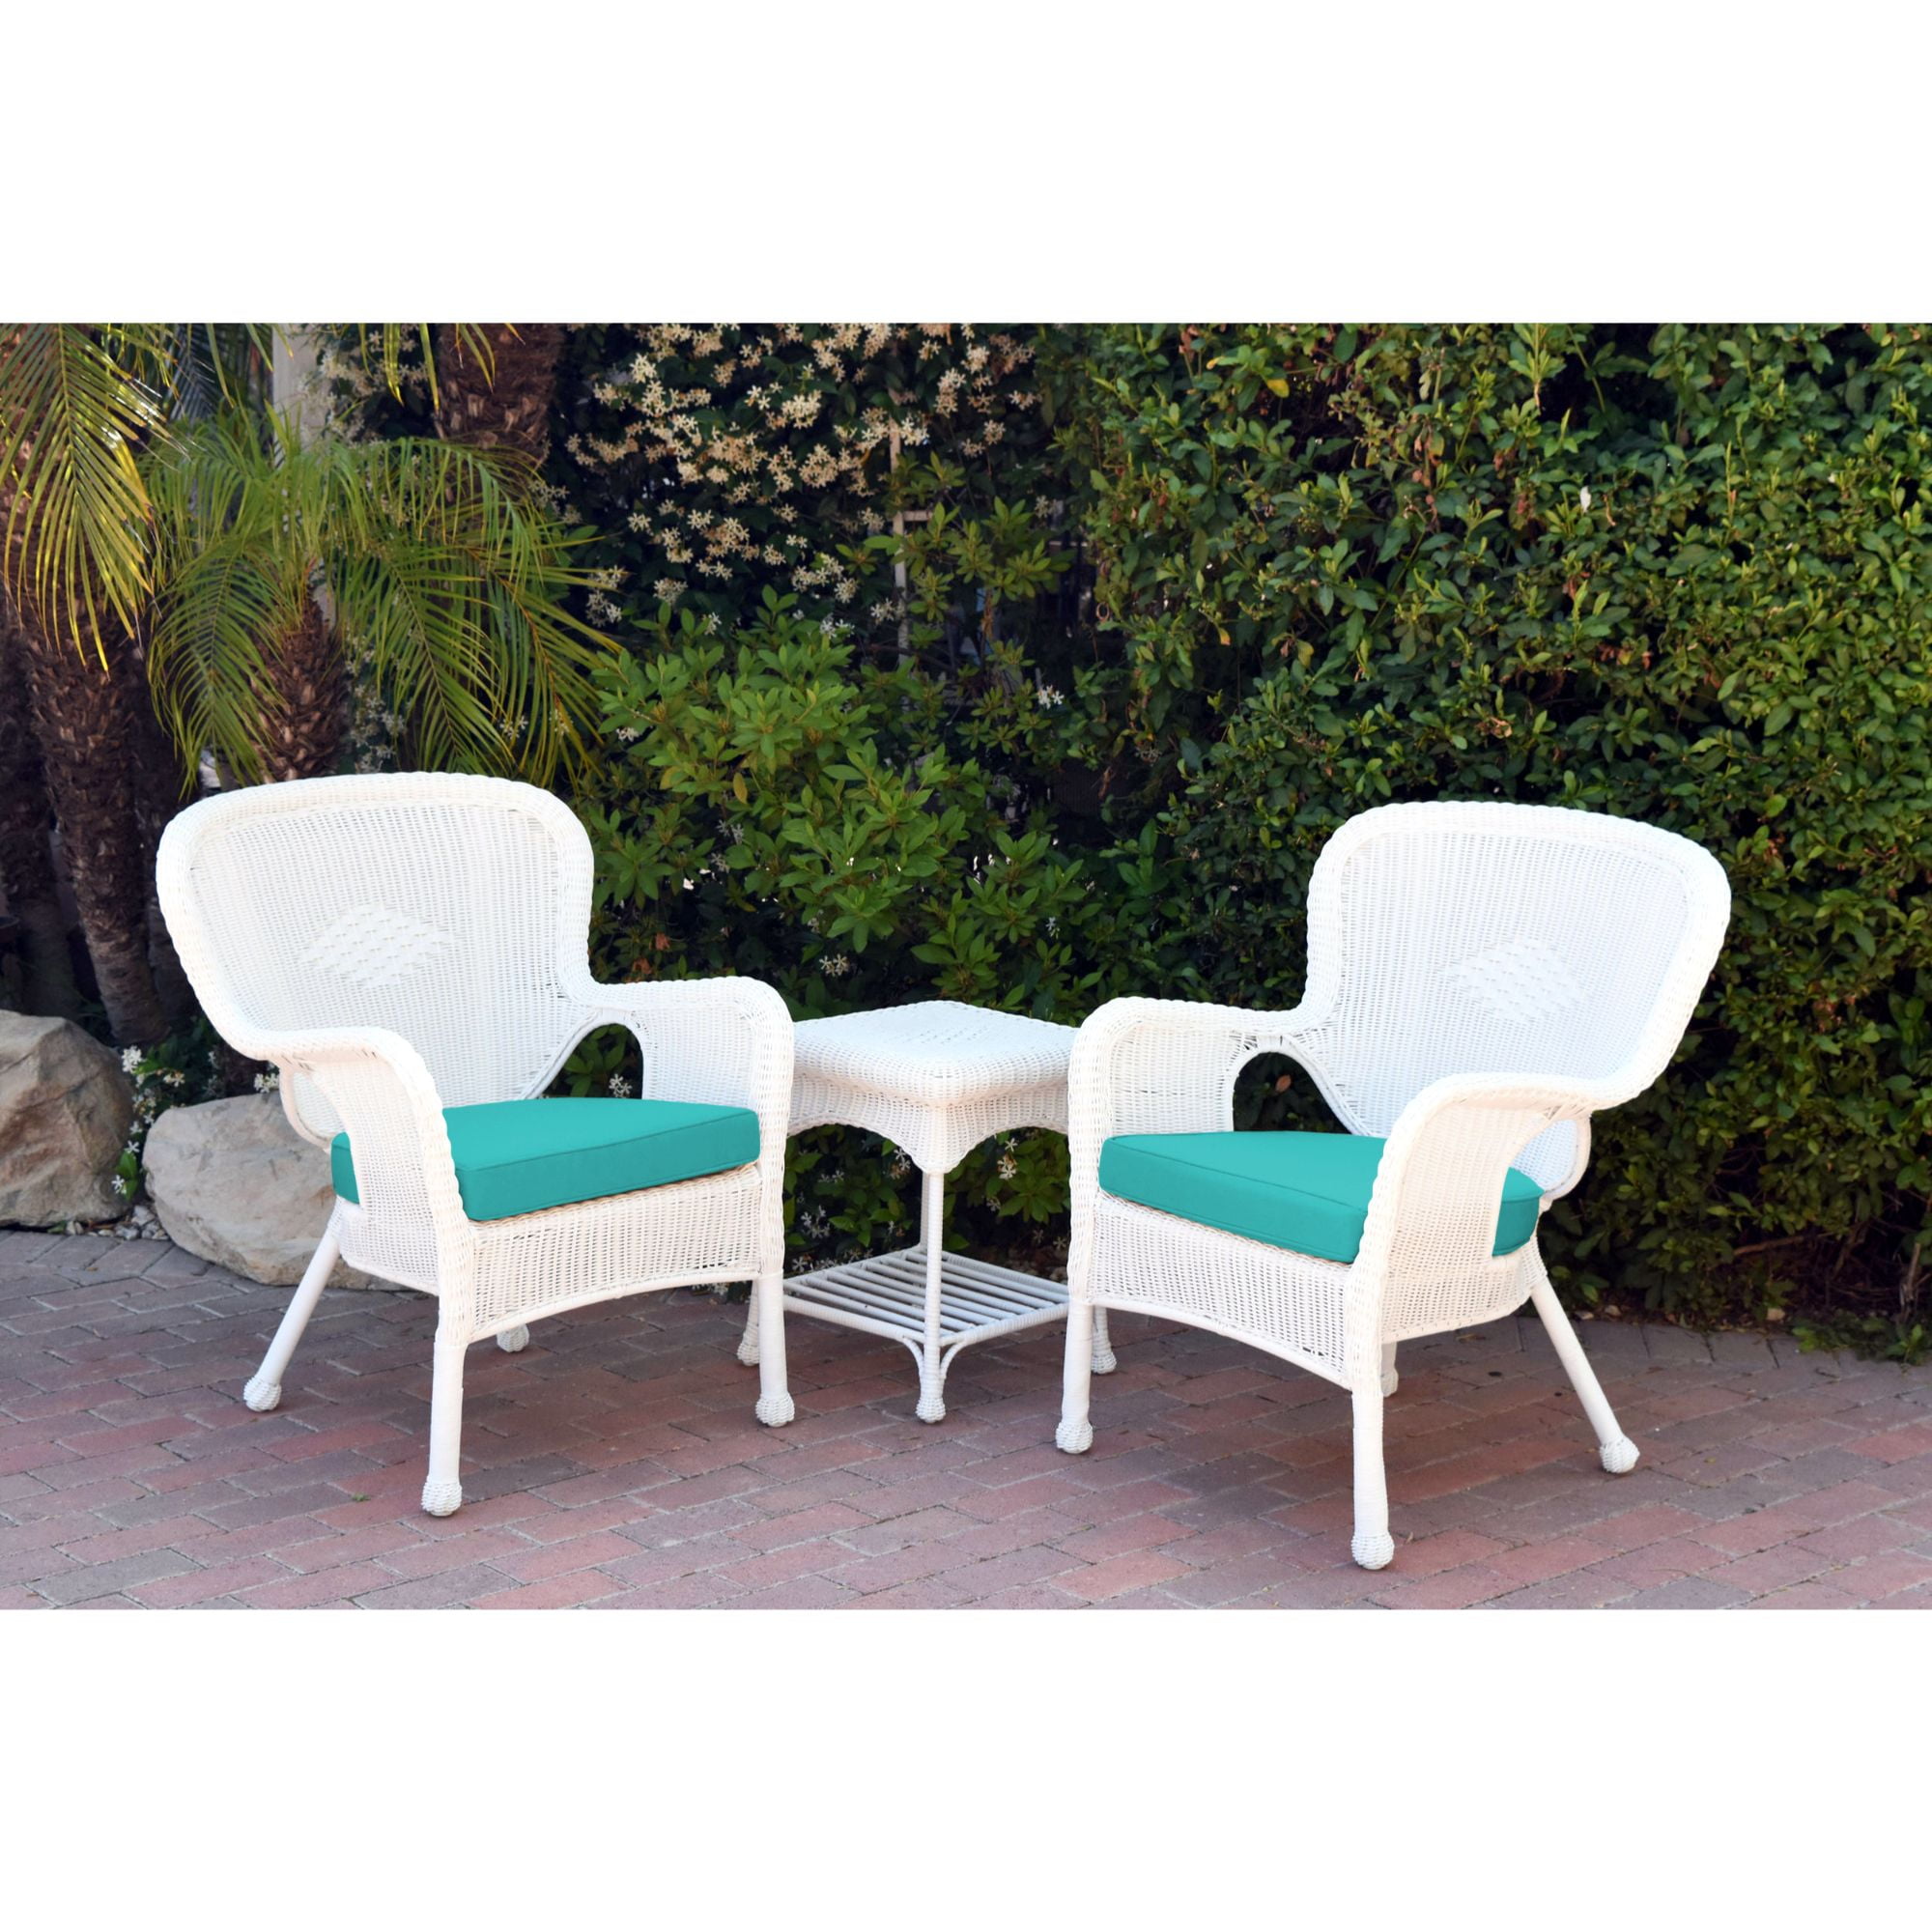 3-Piece White Resin Wicker Outdoor Furniture Patio Conversation Set